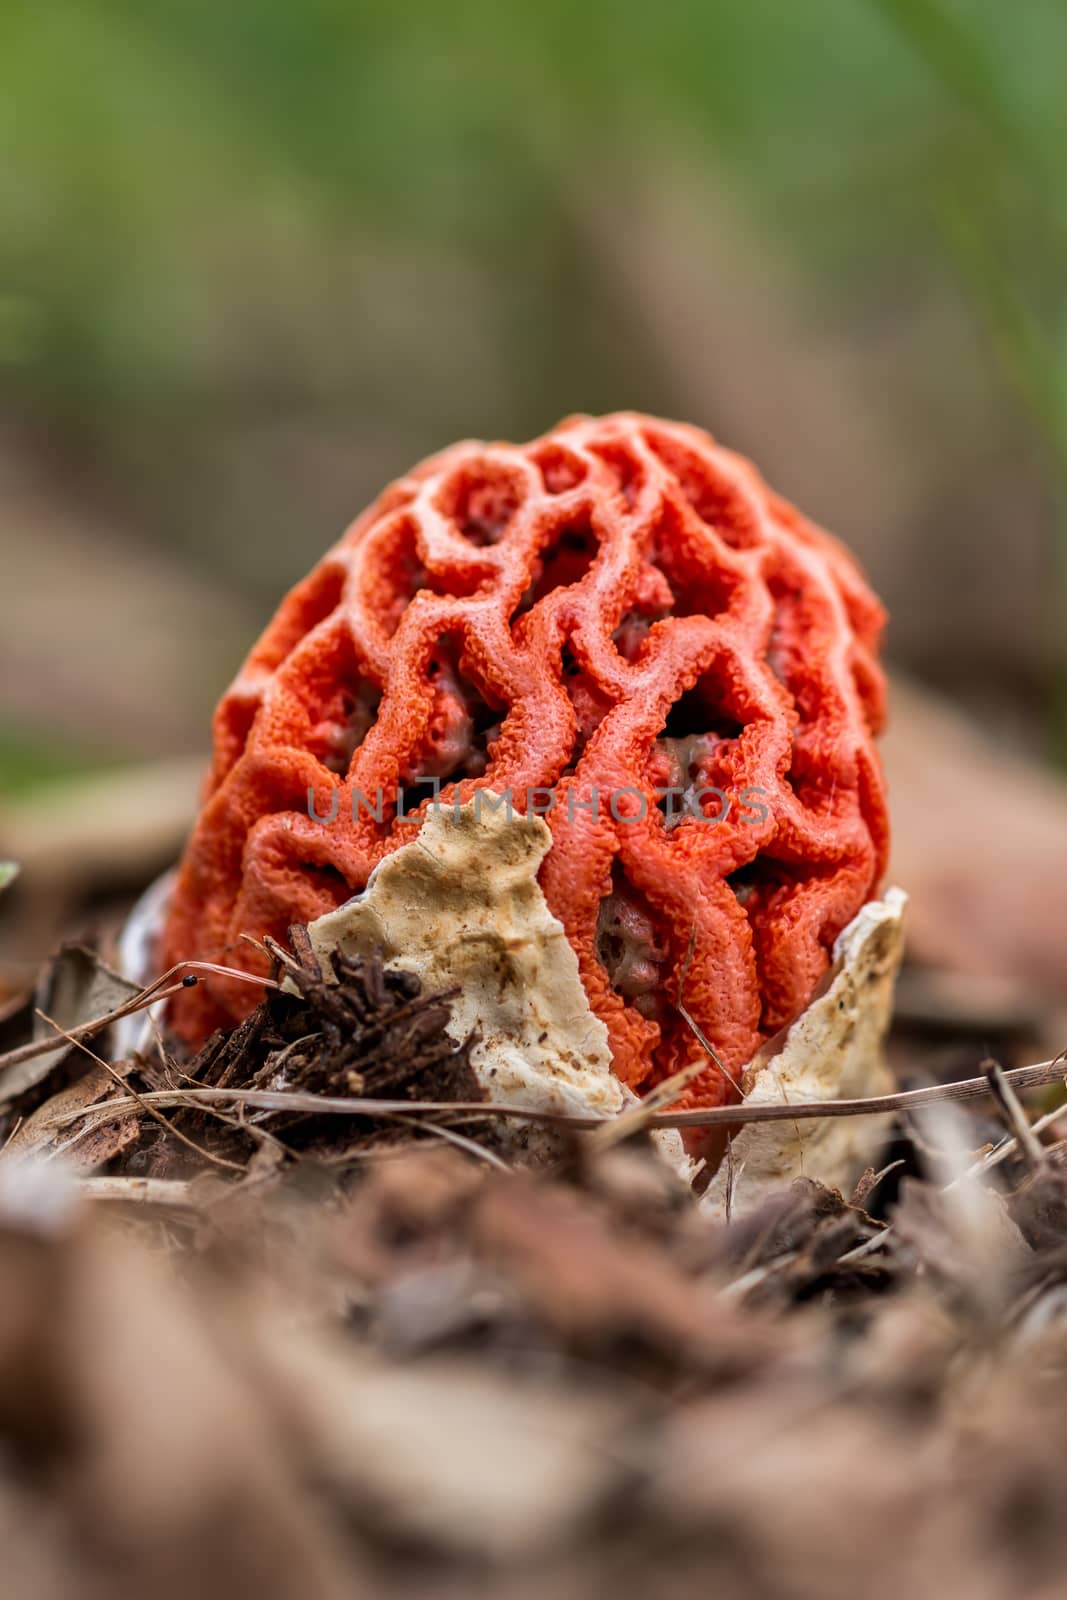 Very interesting species of fungi (Clathrus ruber) 